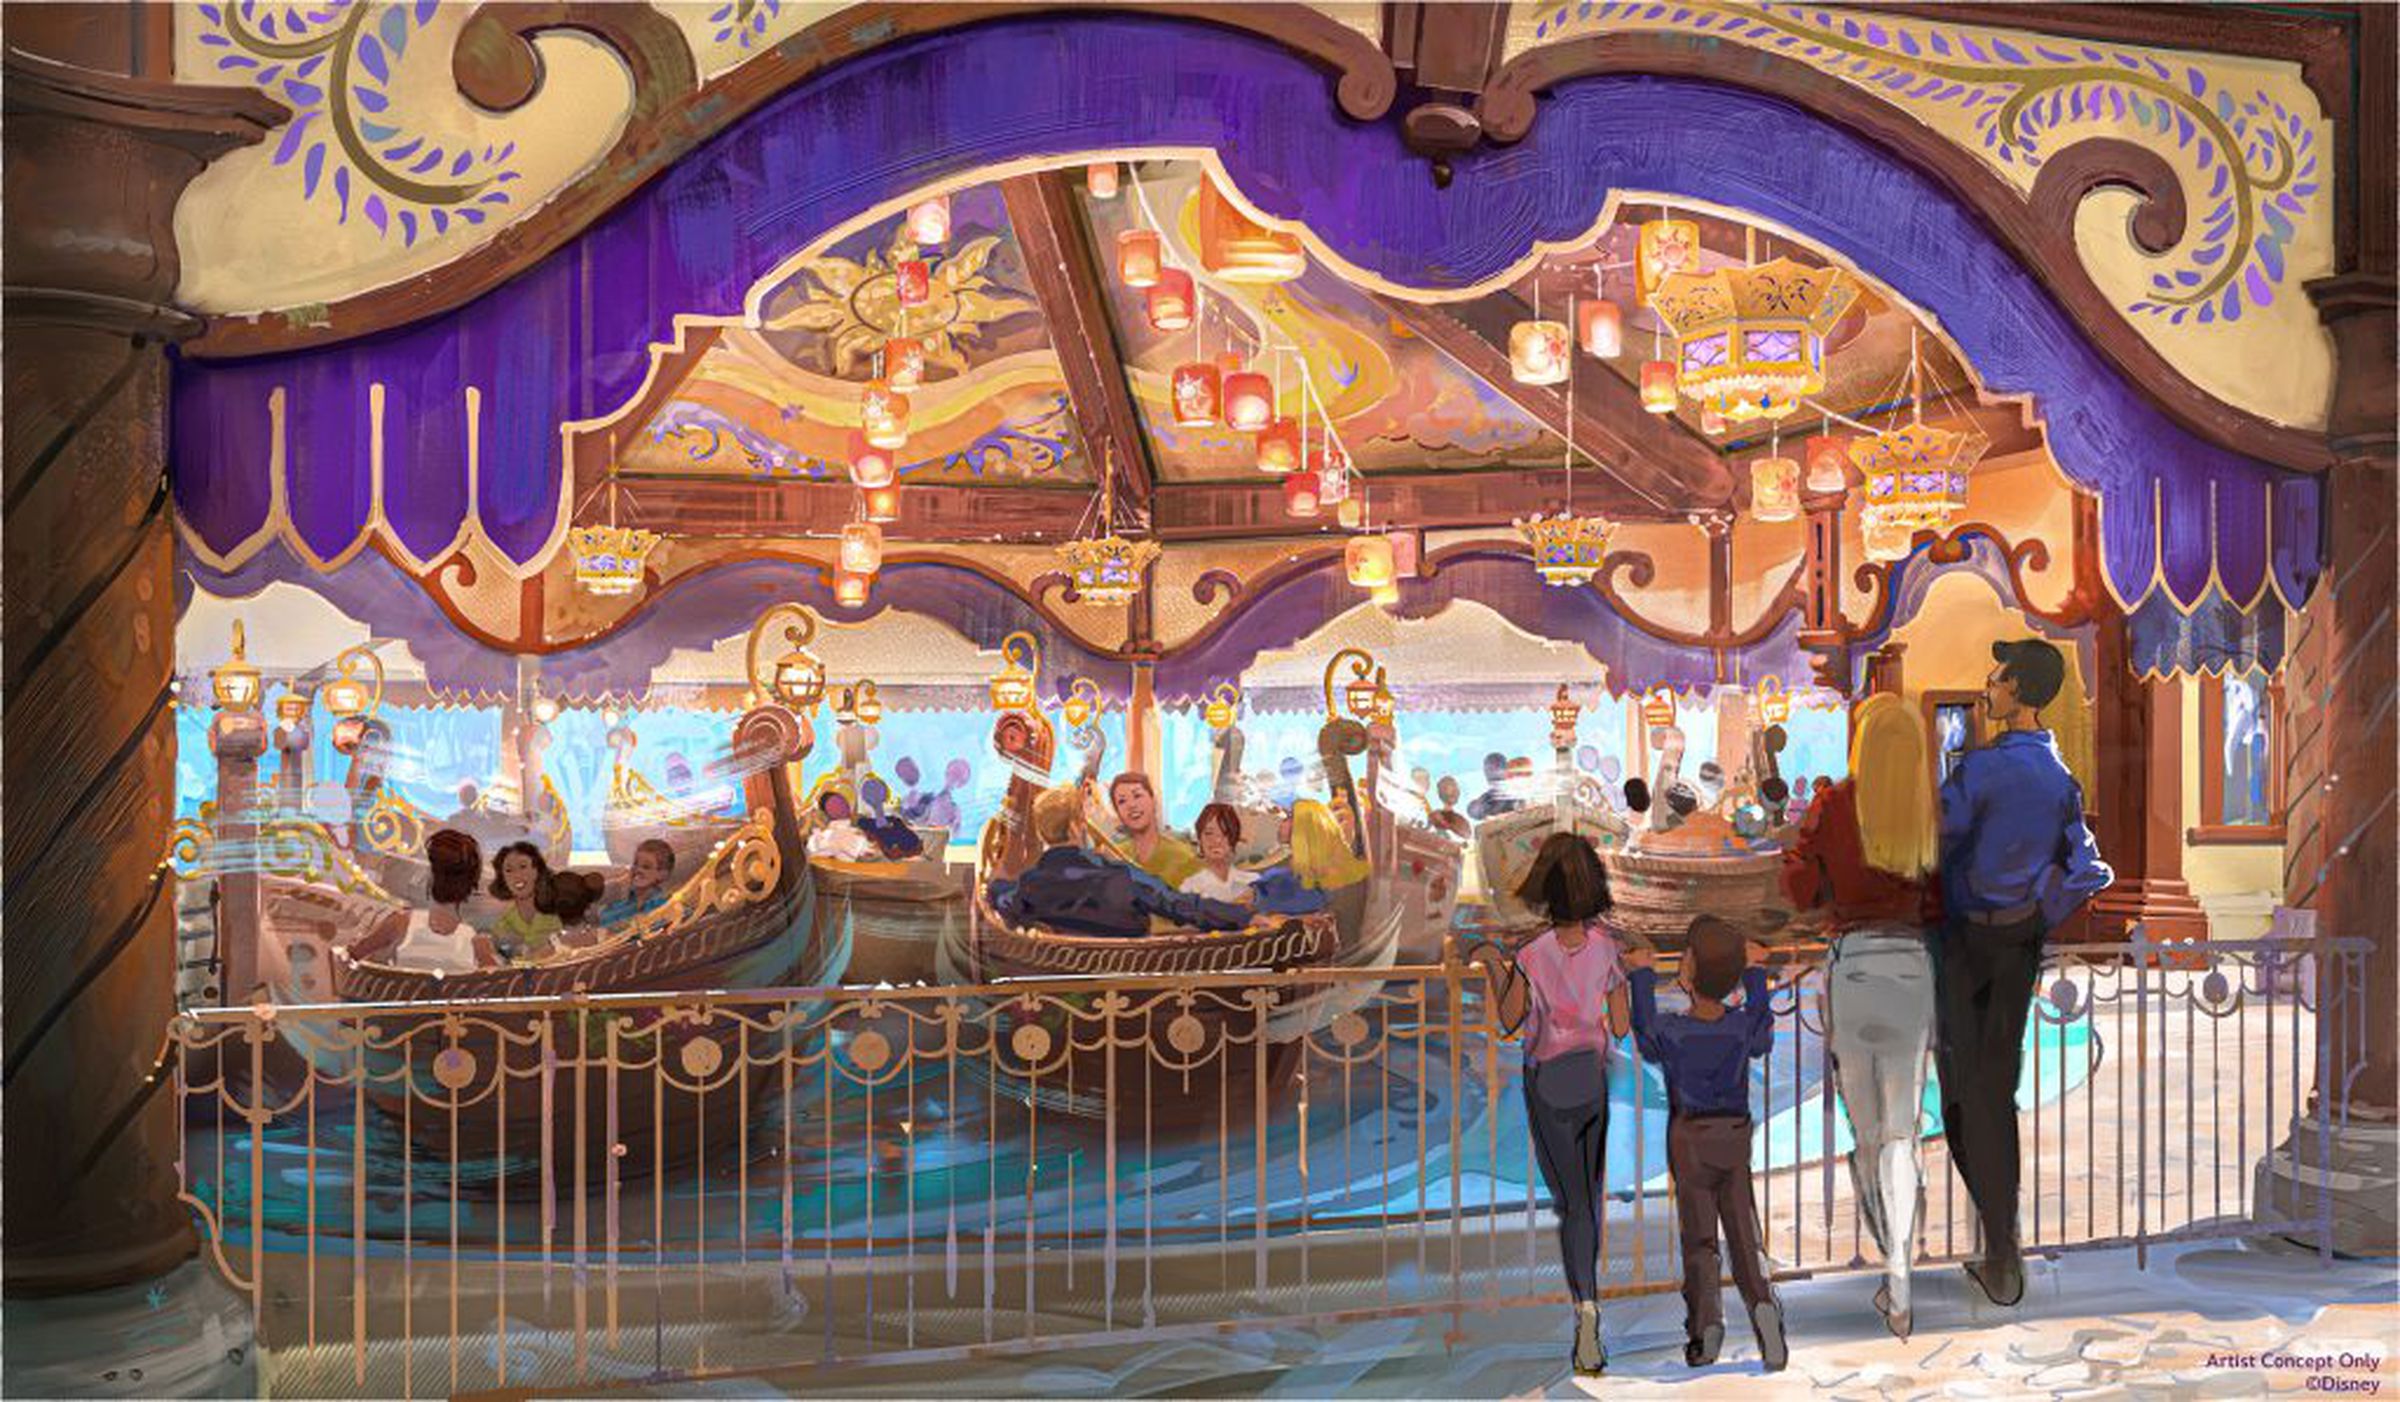 An illustration of Disney’s new Tangled-themed ride at Disneyland Paris.